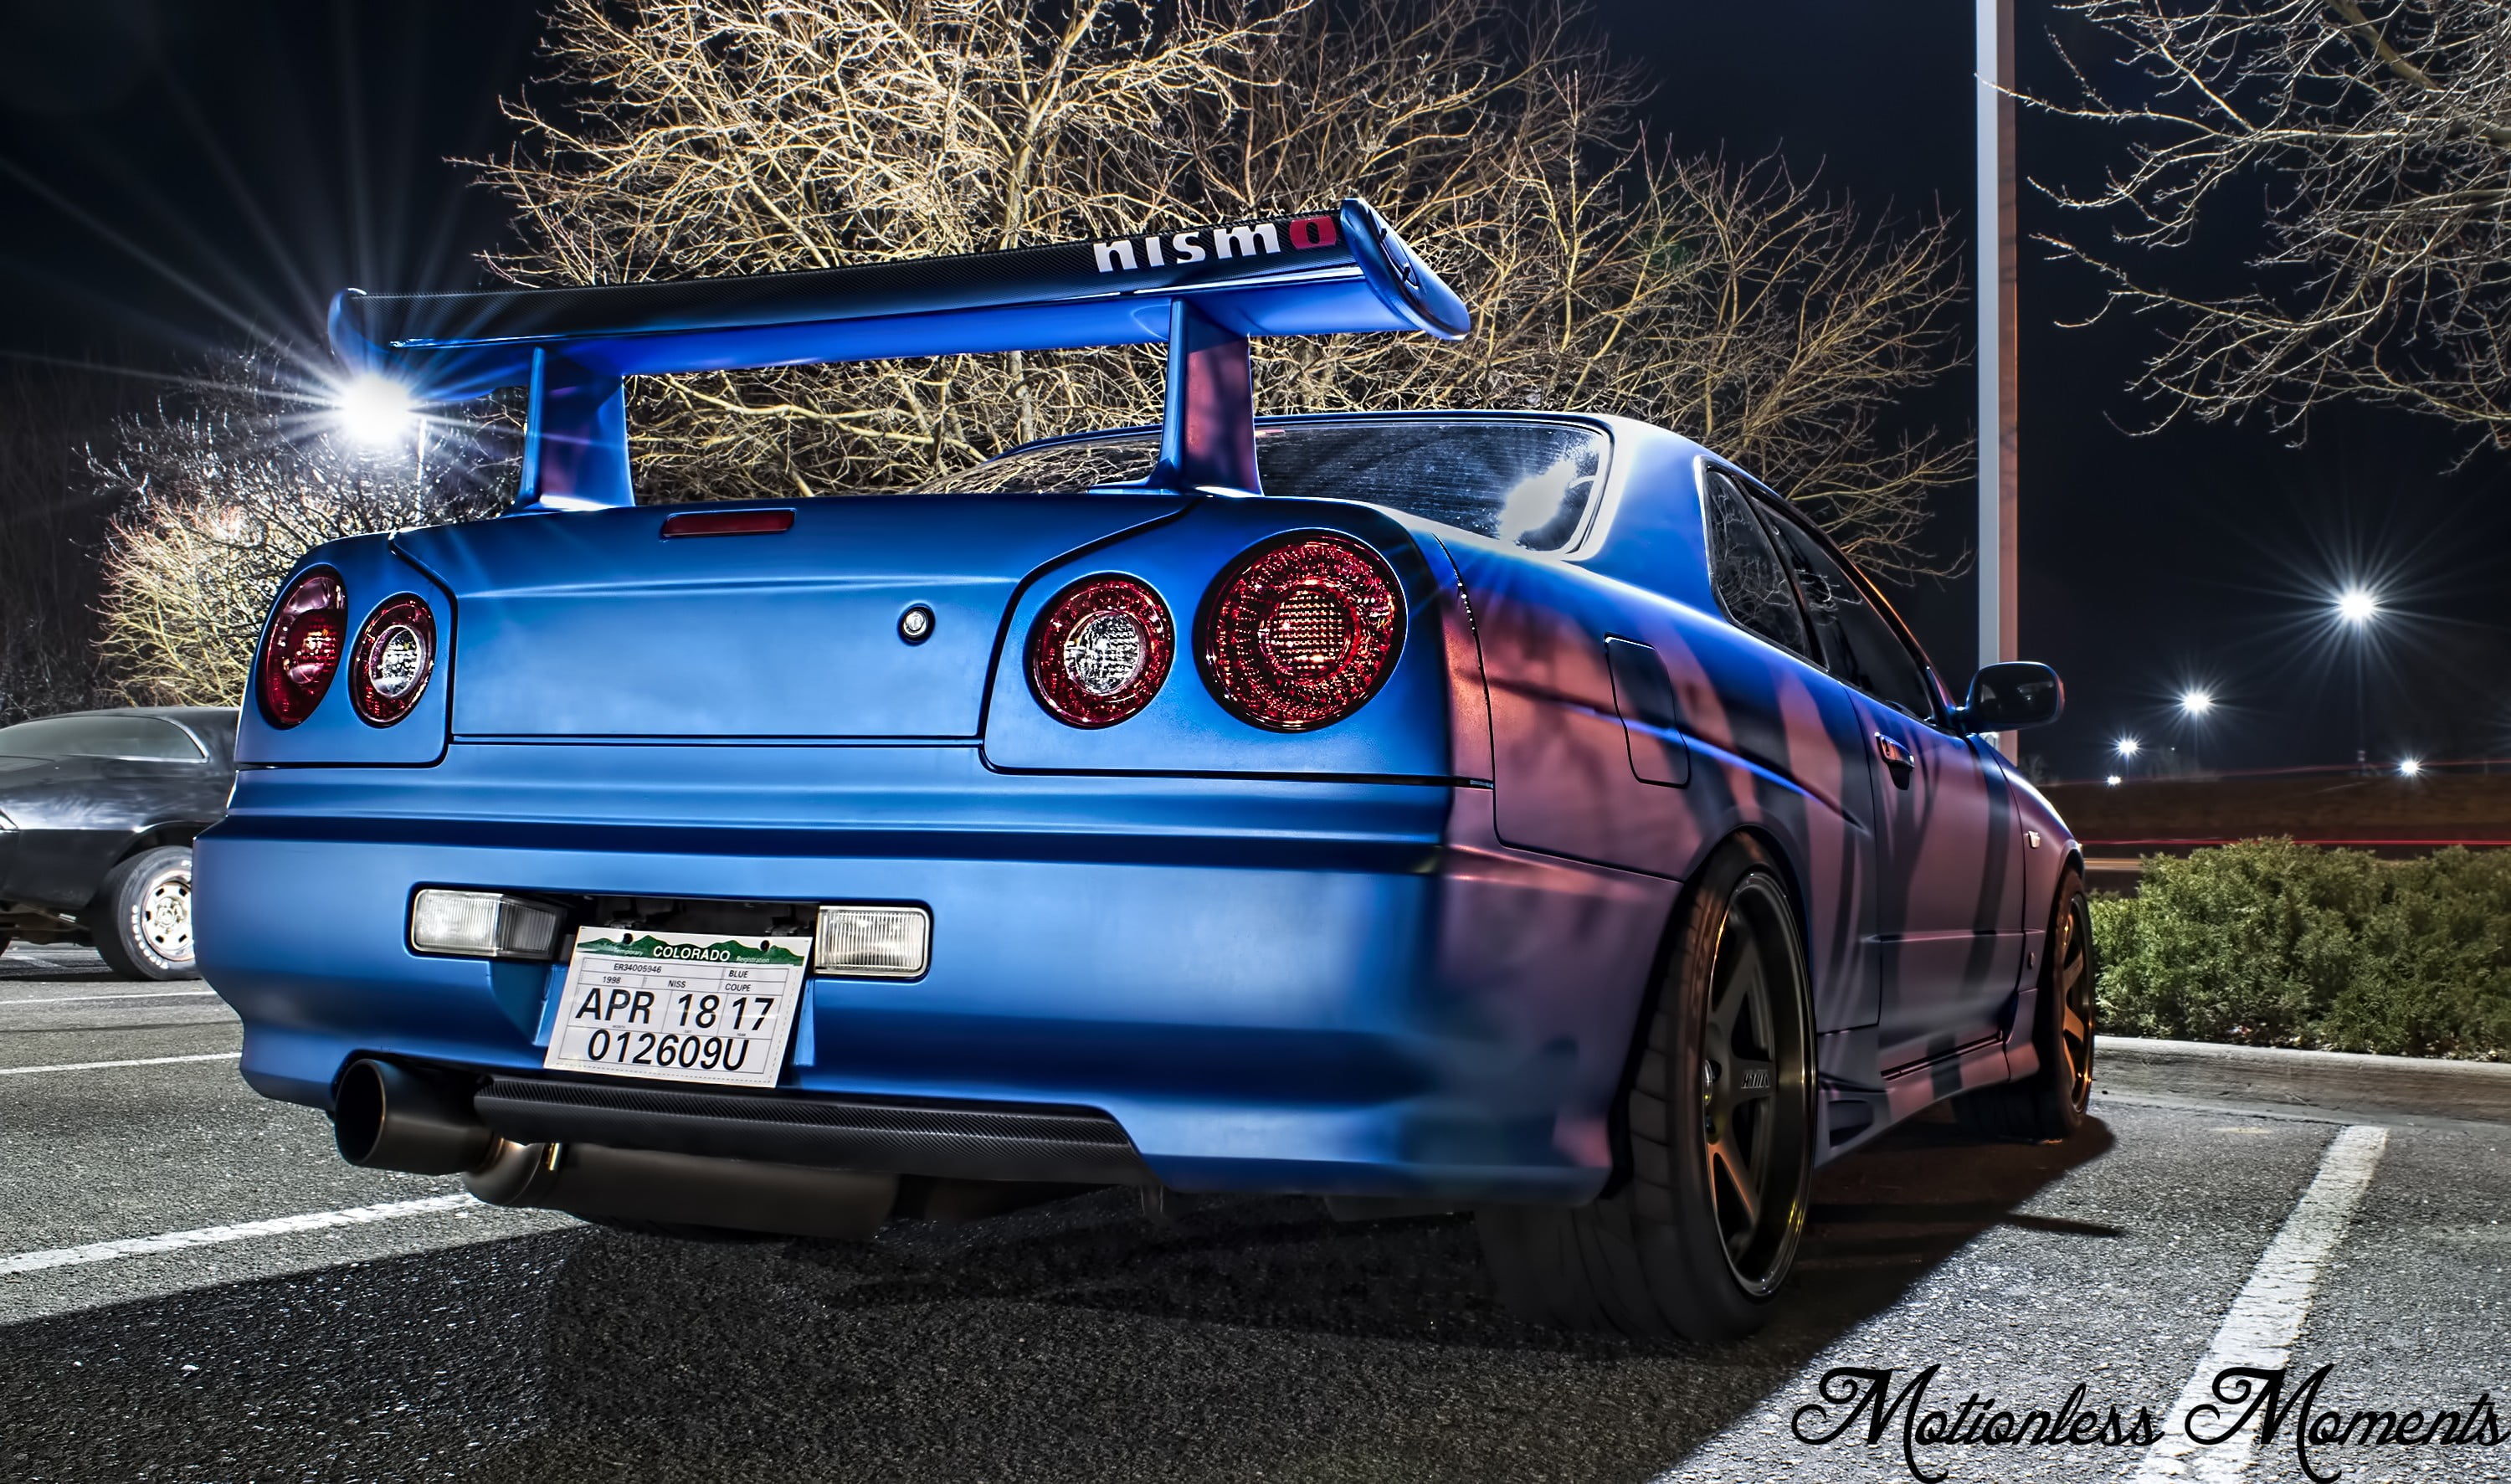 blue Nissan GT-R coupe, JDM, Nissan Skyline GT-R R34, car